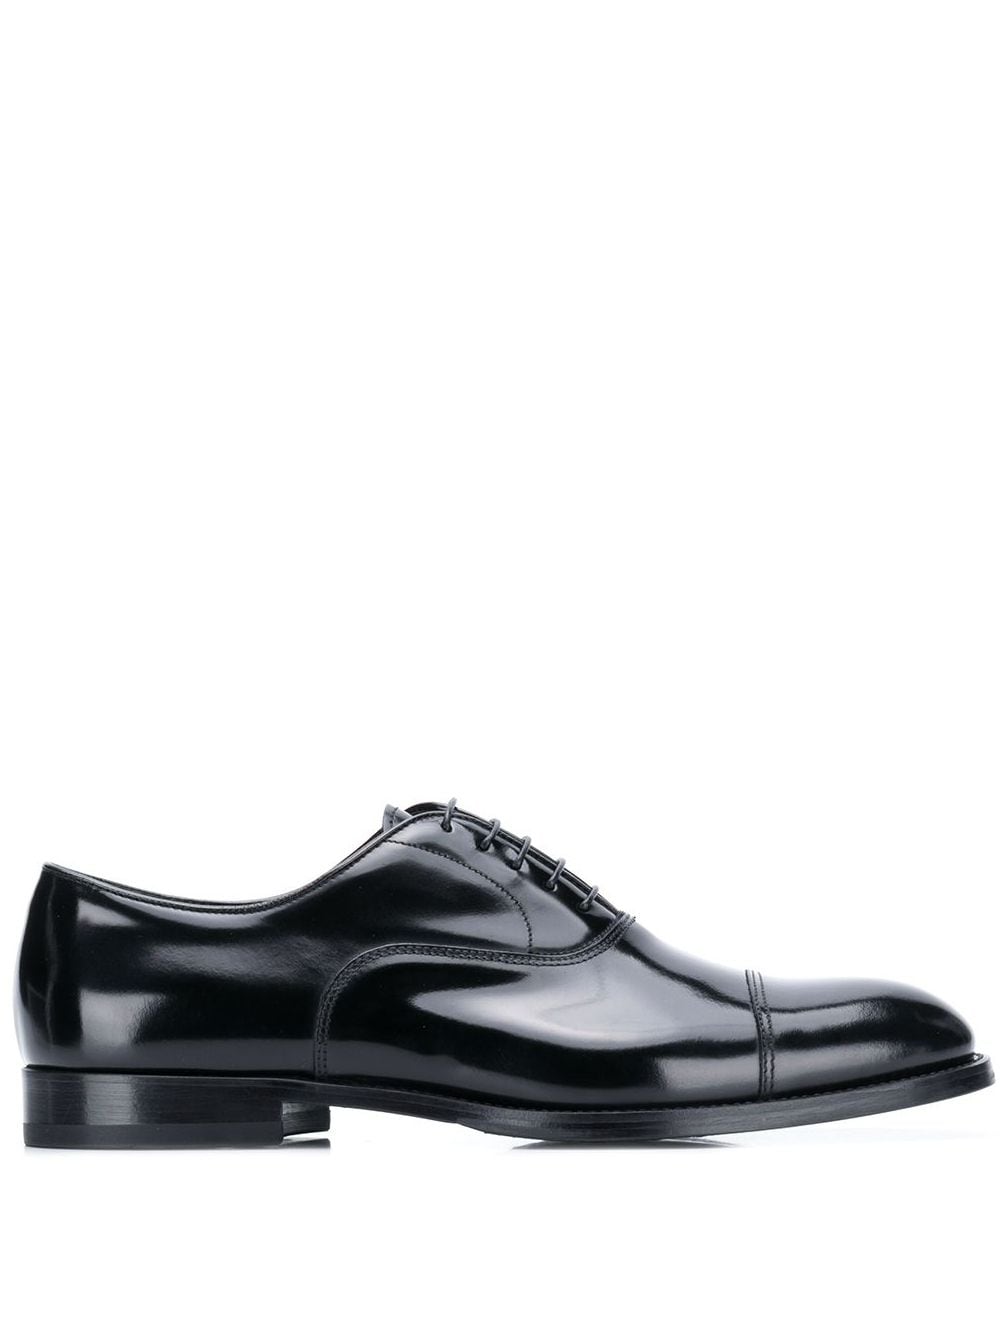 Doucal's classic oxford shoes - Black von Doucal's